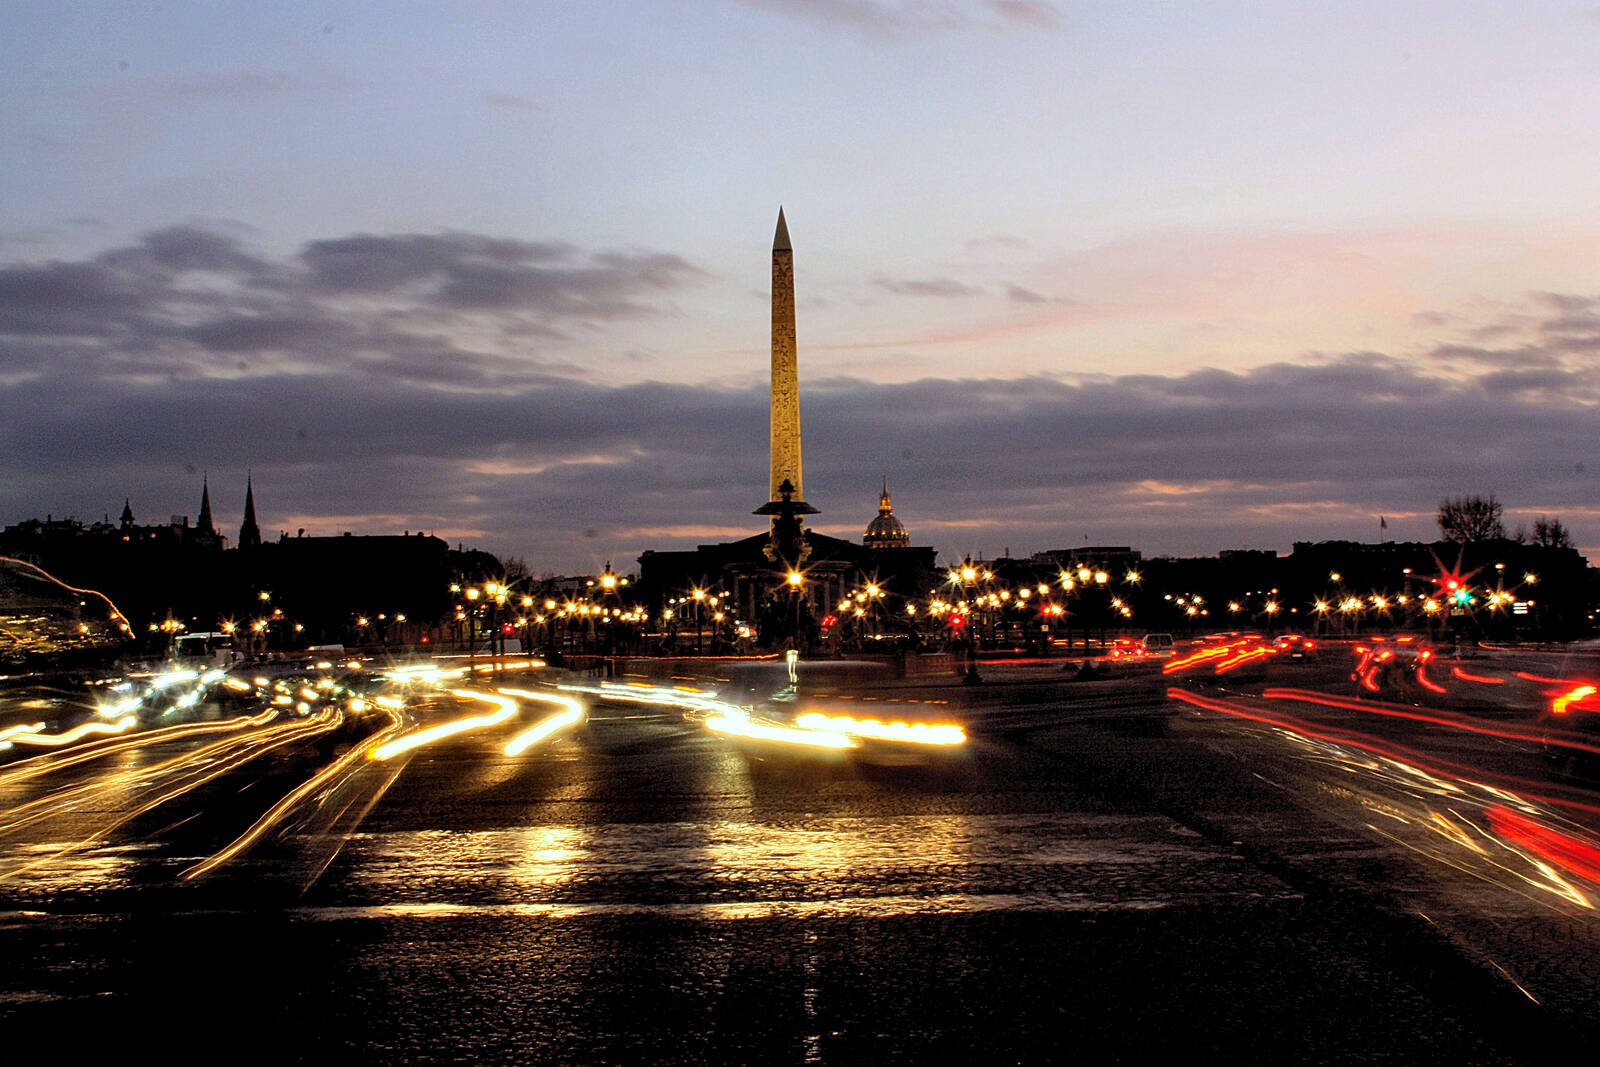 Image of Place de la Concorde by Jeff Abramowitz